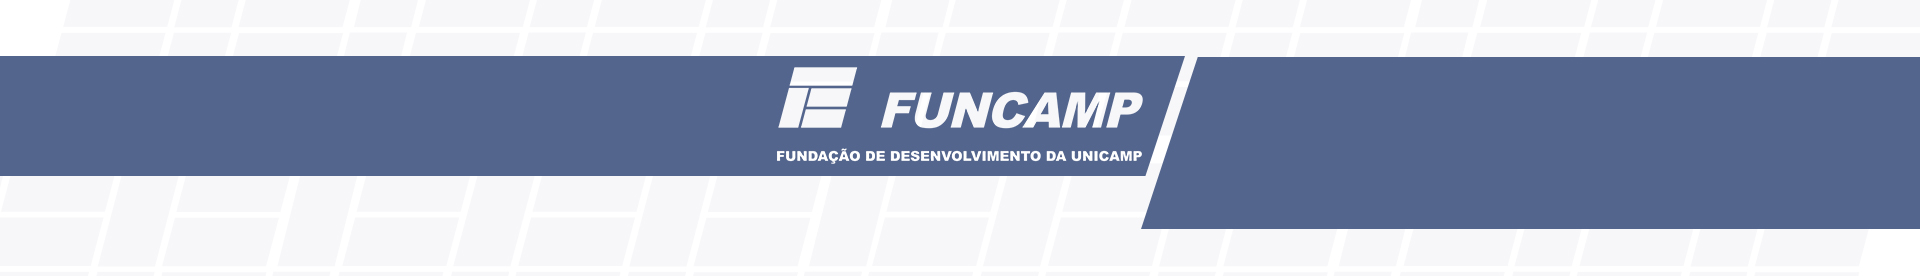 banner - Formação CIEspMat EaD 2021